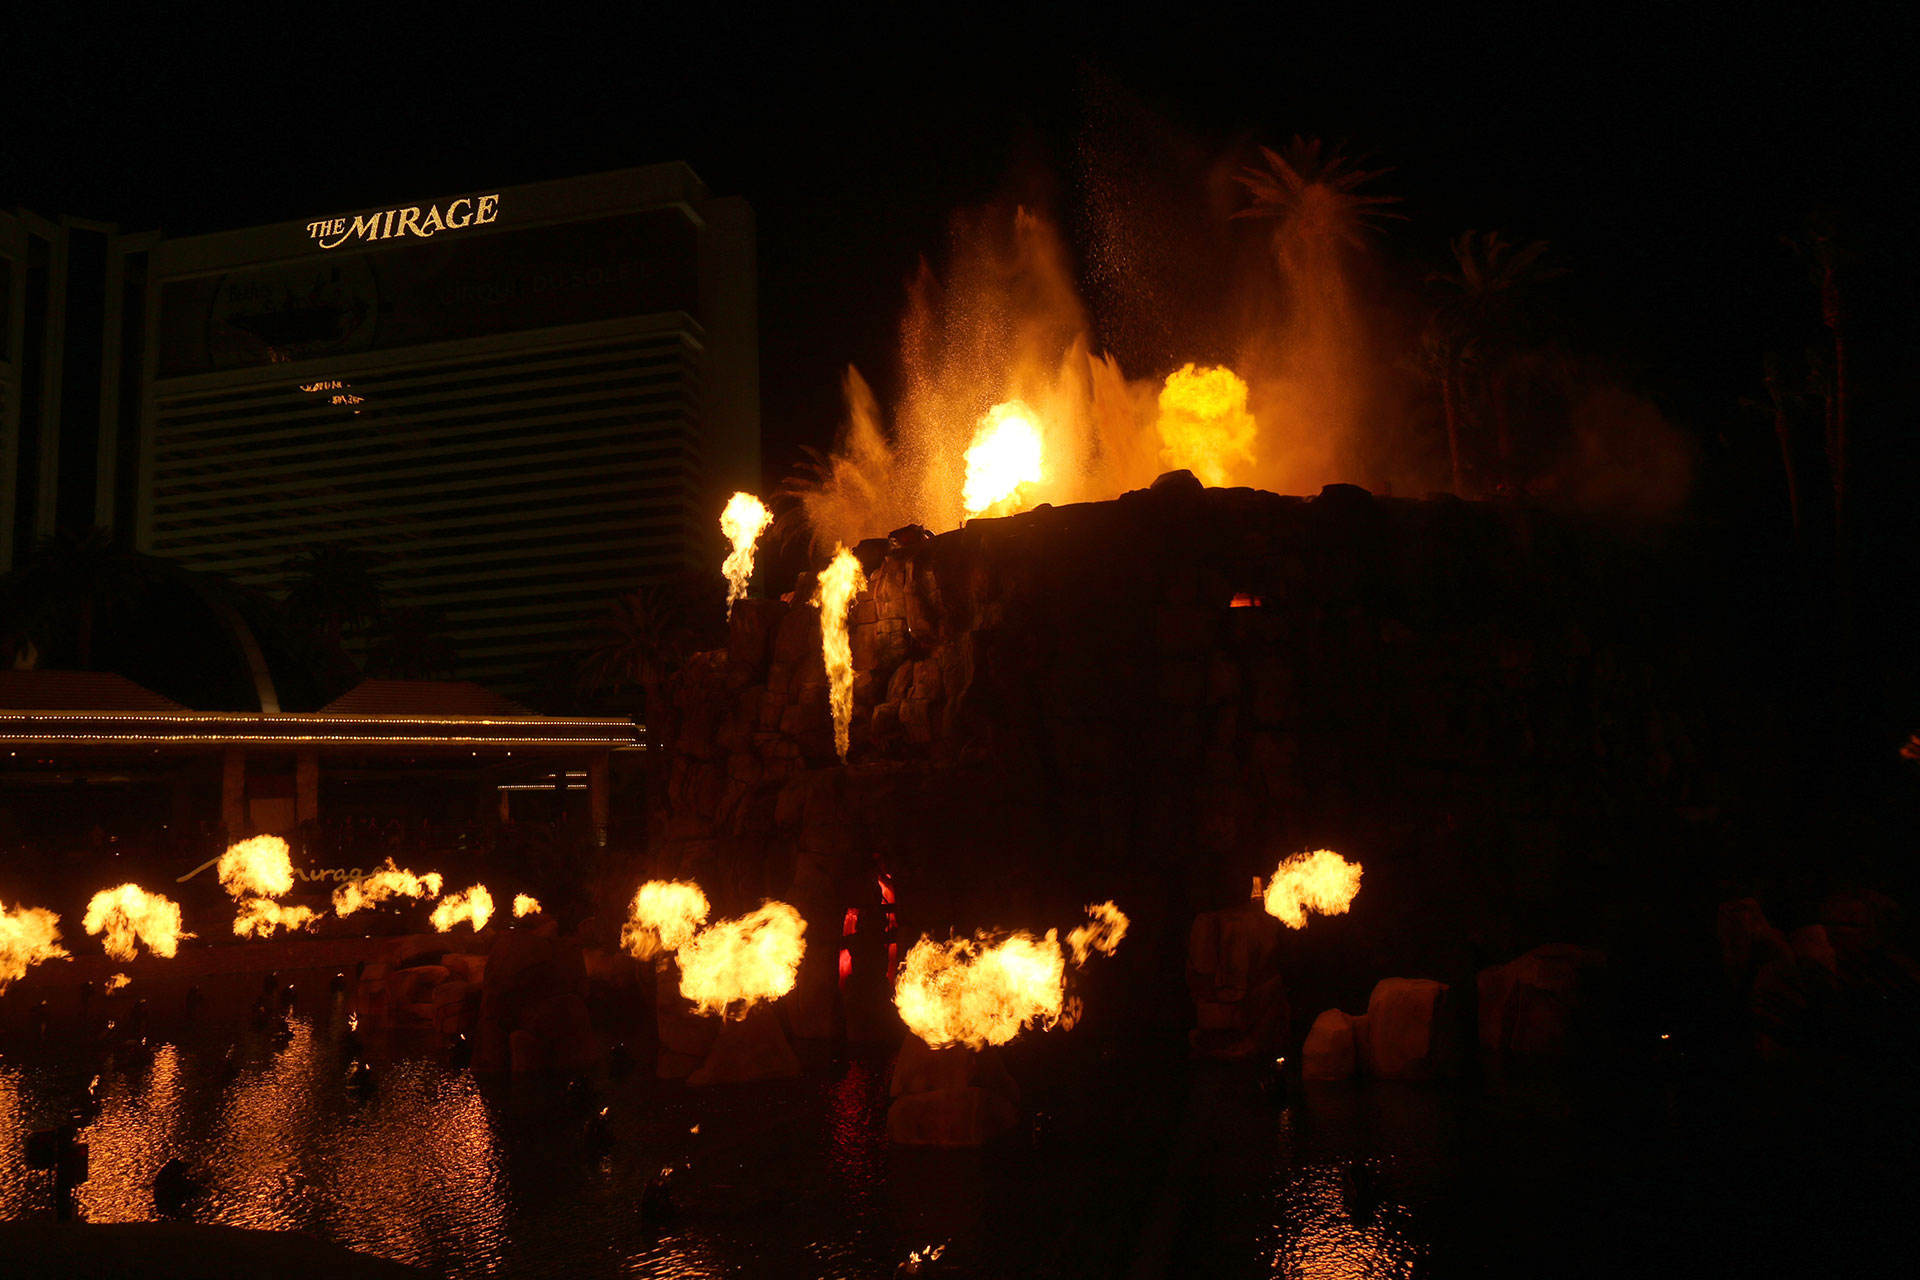 Bronwen watching the Mirage’s Volcano Show, Las Vegas